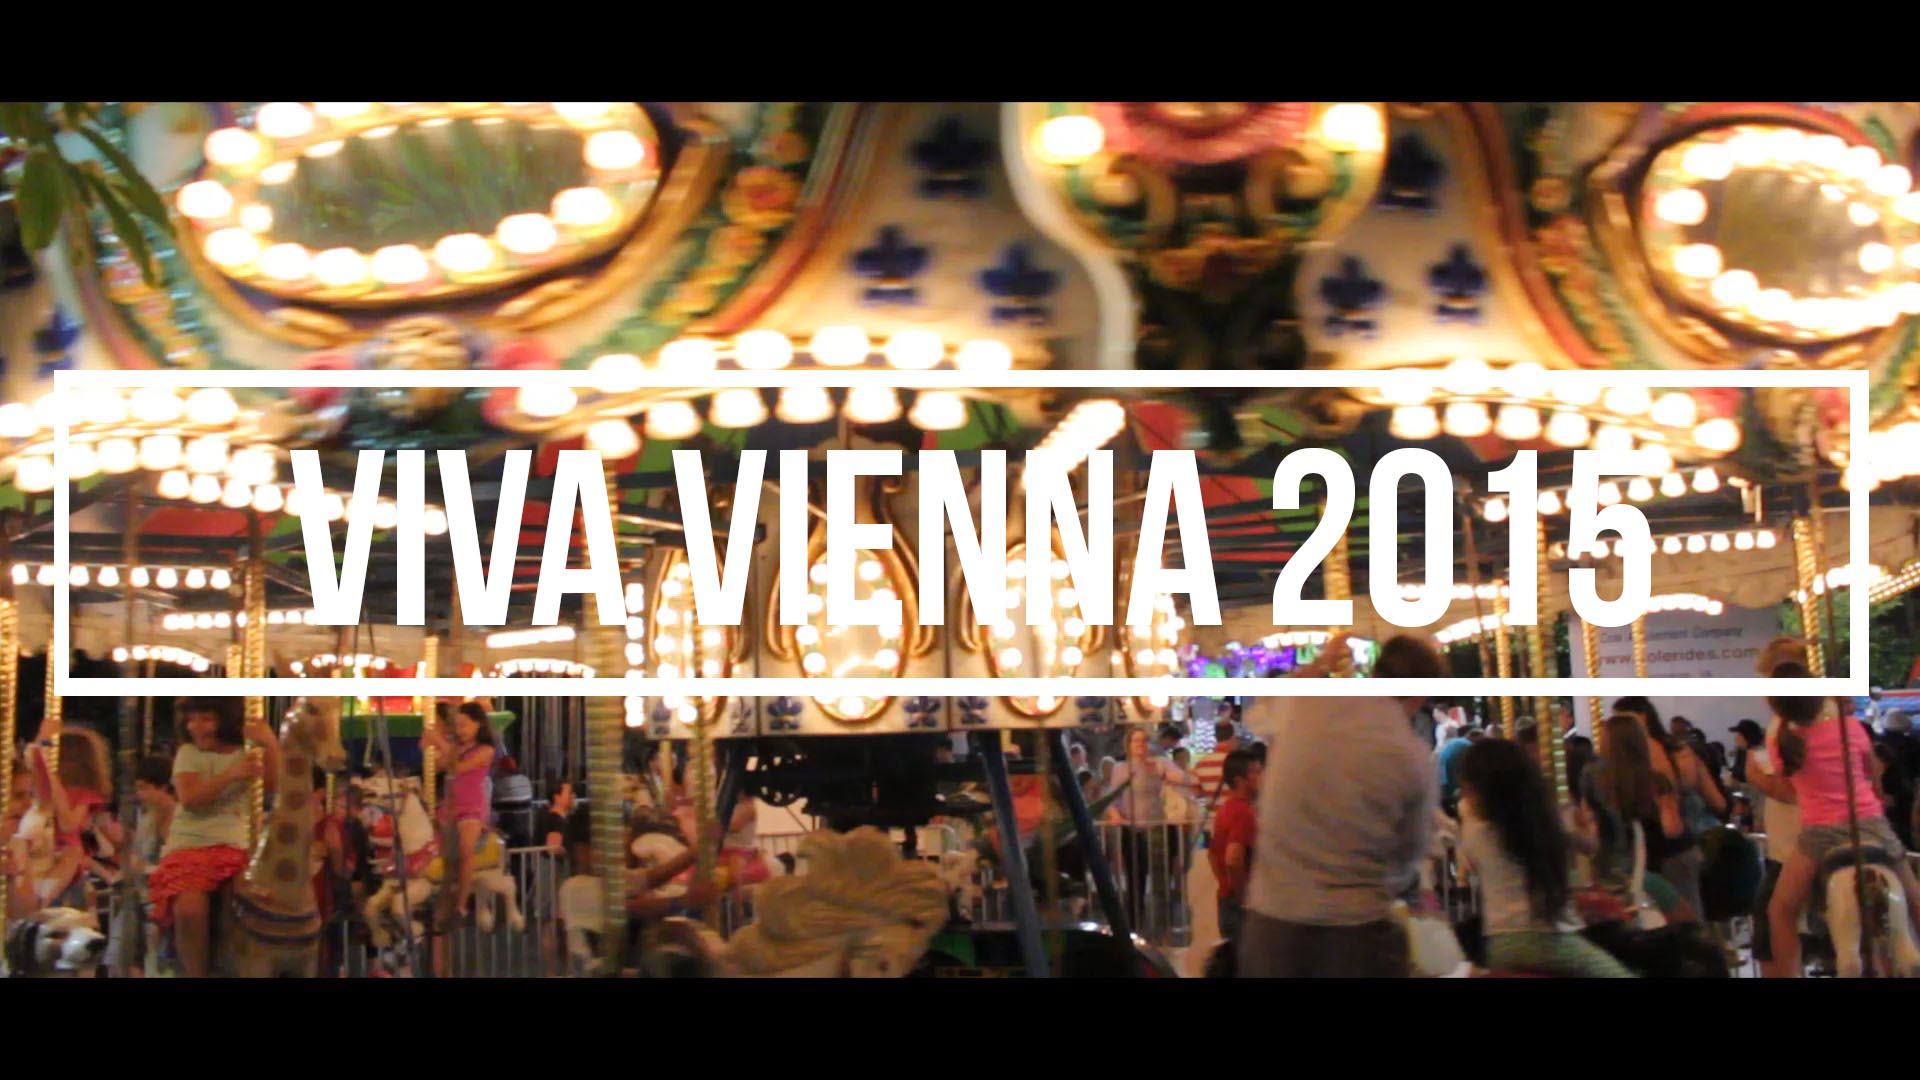 Viva Vienna 2015 | Canon EOS Rebel T6i/T6s (750D/760D) DSLR Video Test | Low light Cinema style